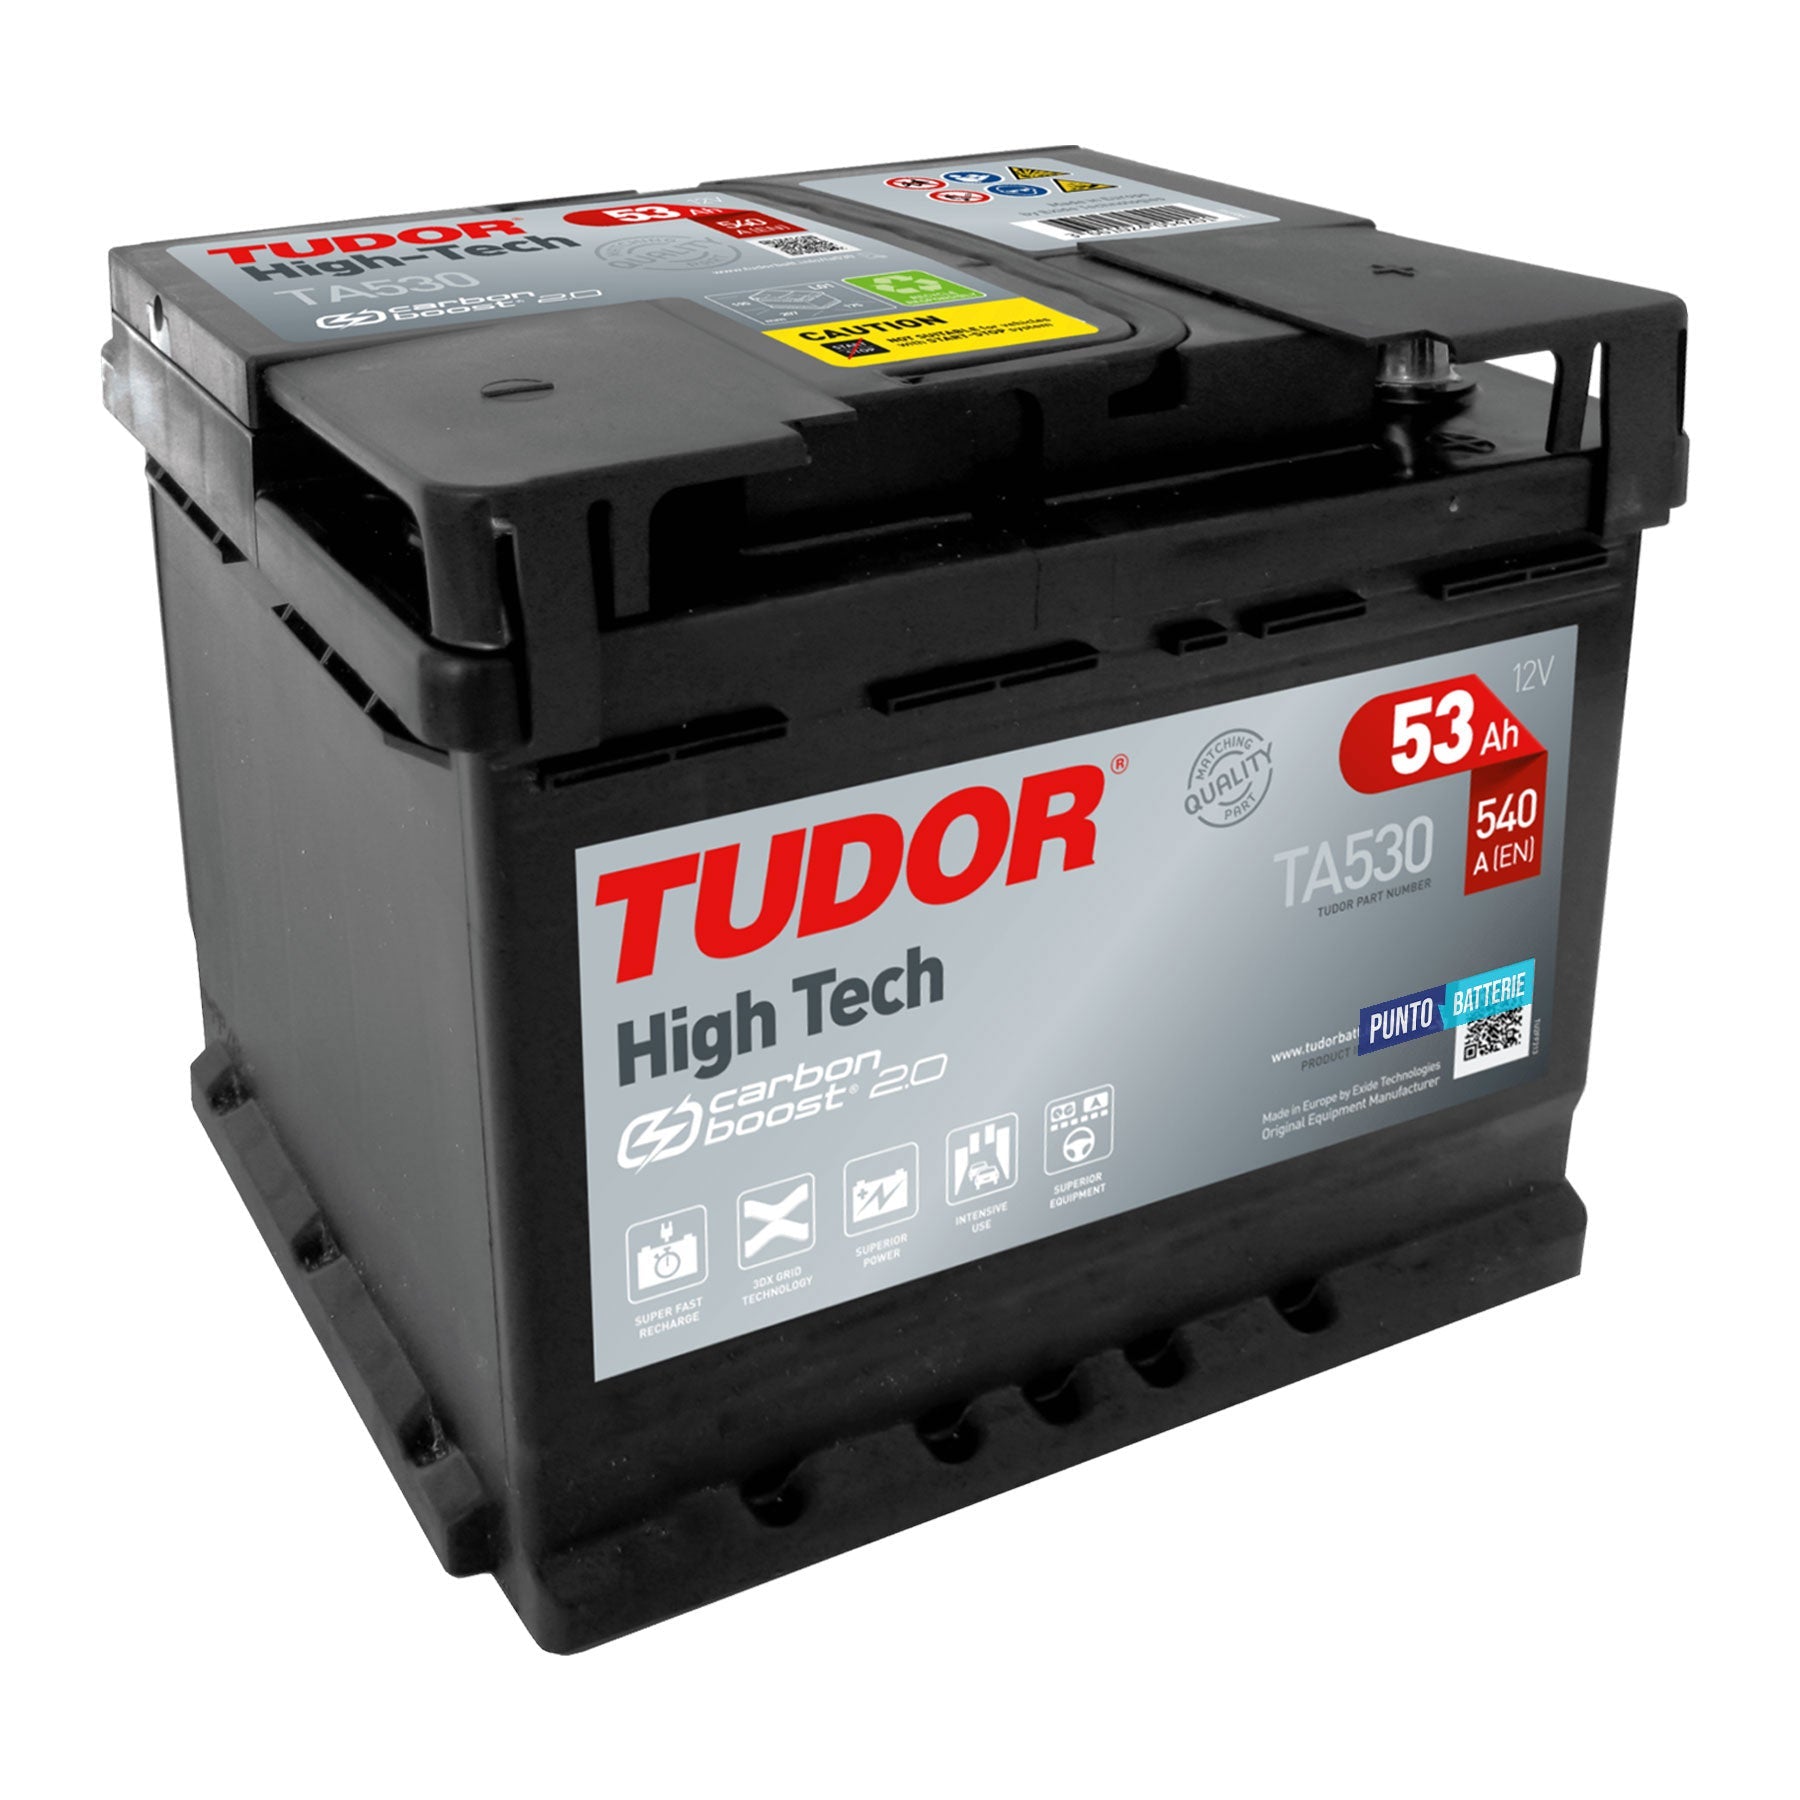 Batteria Tudor TA530 - High Tech (12V, 53Ah, 540A) - Puntobatterie